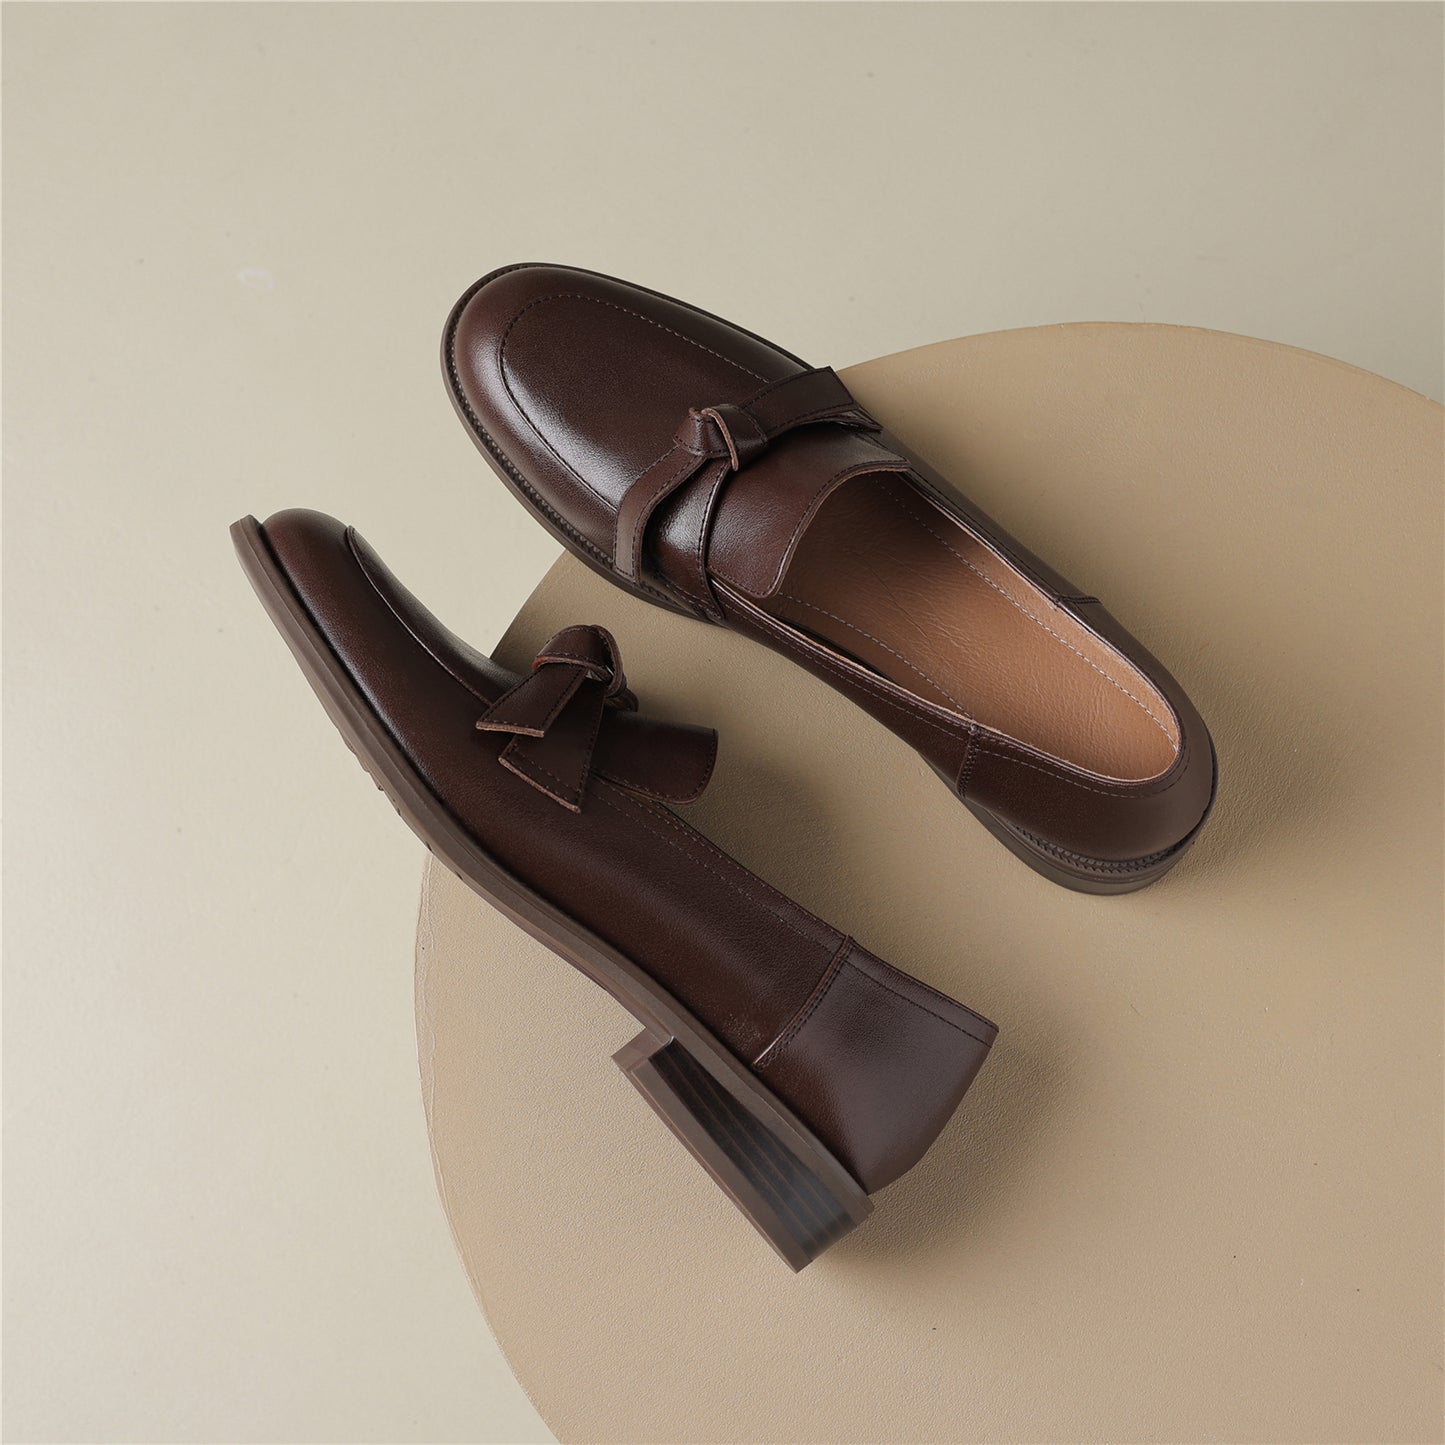 TinaCus Genuine Leather Round Toe Handmade Women's Slip On Comfort Flat Shoes